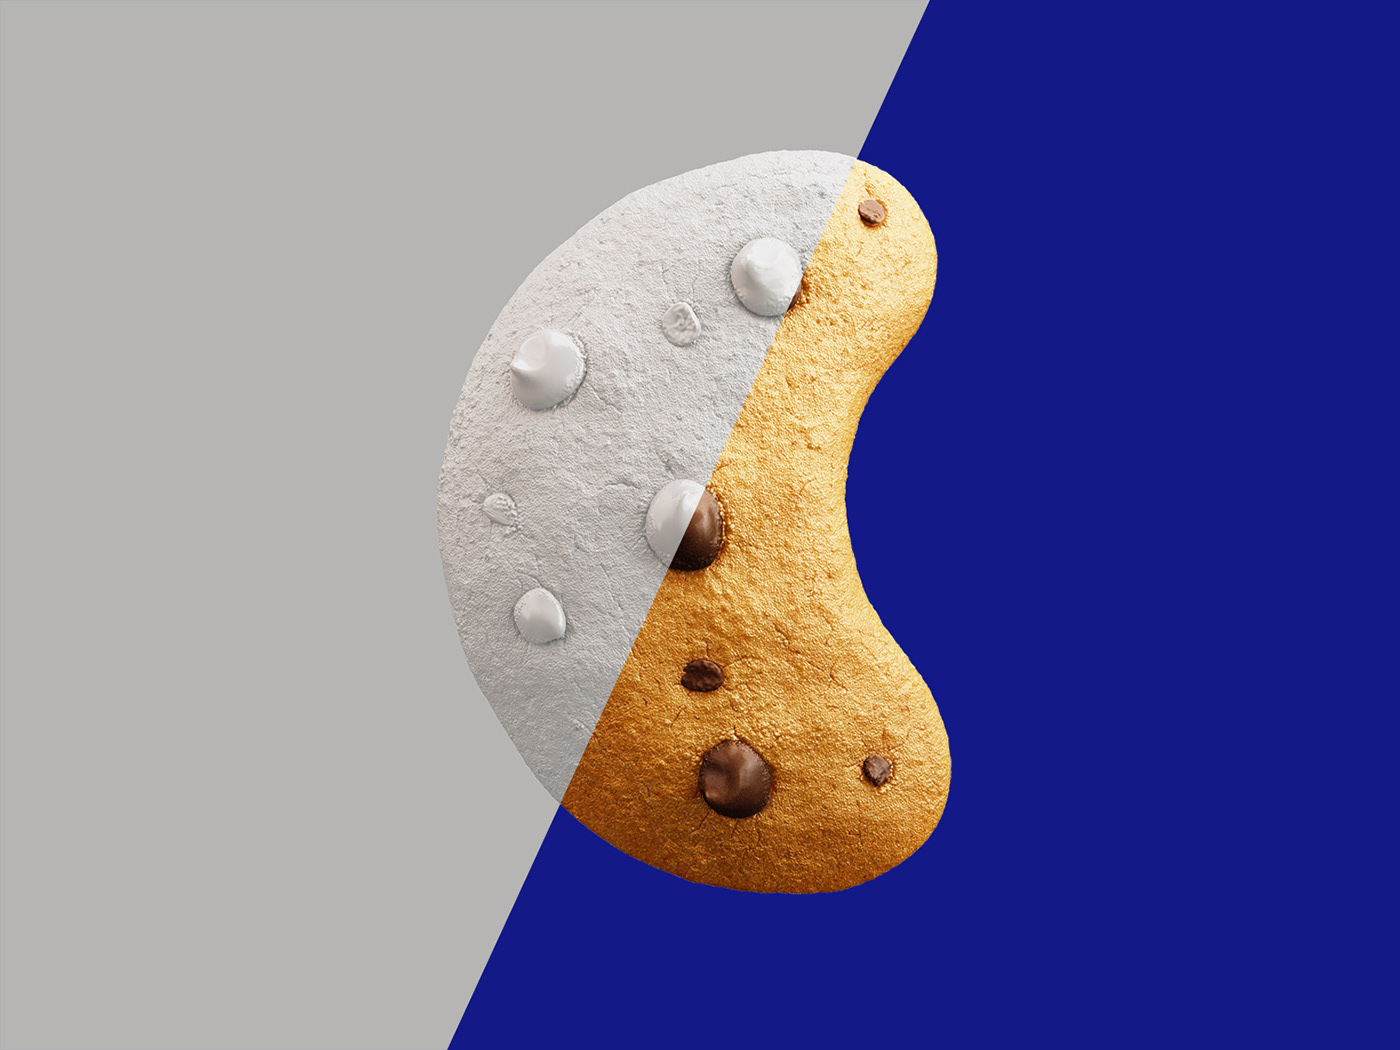 biscuit 3D illustration cgi food Consumer goods CGI Artist cookies Biscotti illustration project key visual